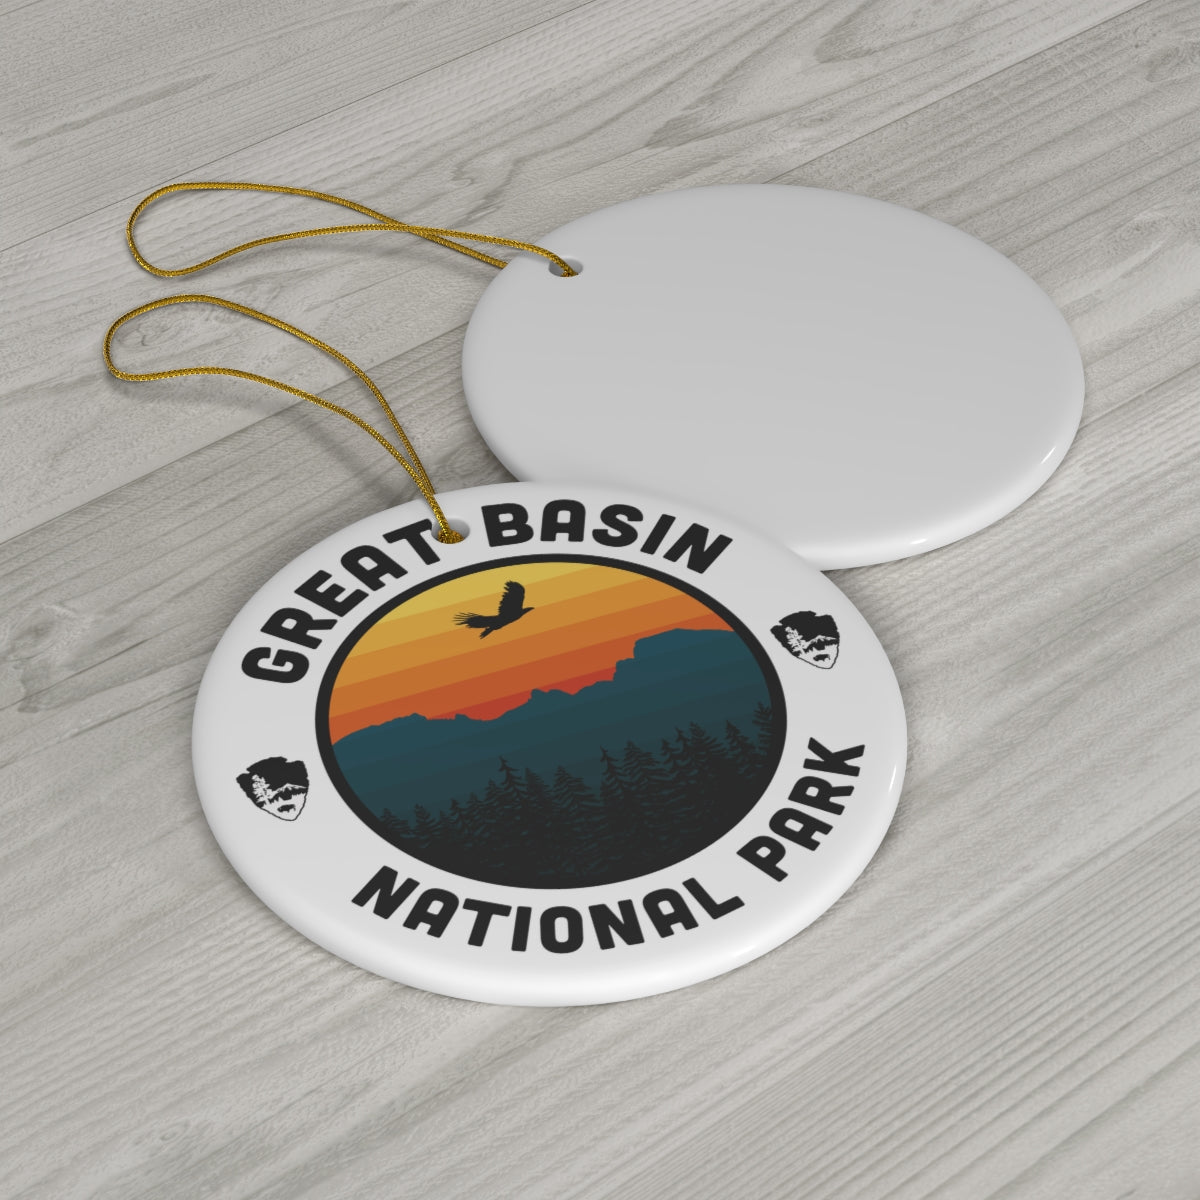 Great BasinNational Park Ornament - Round Emblem Design